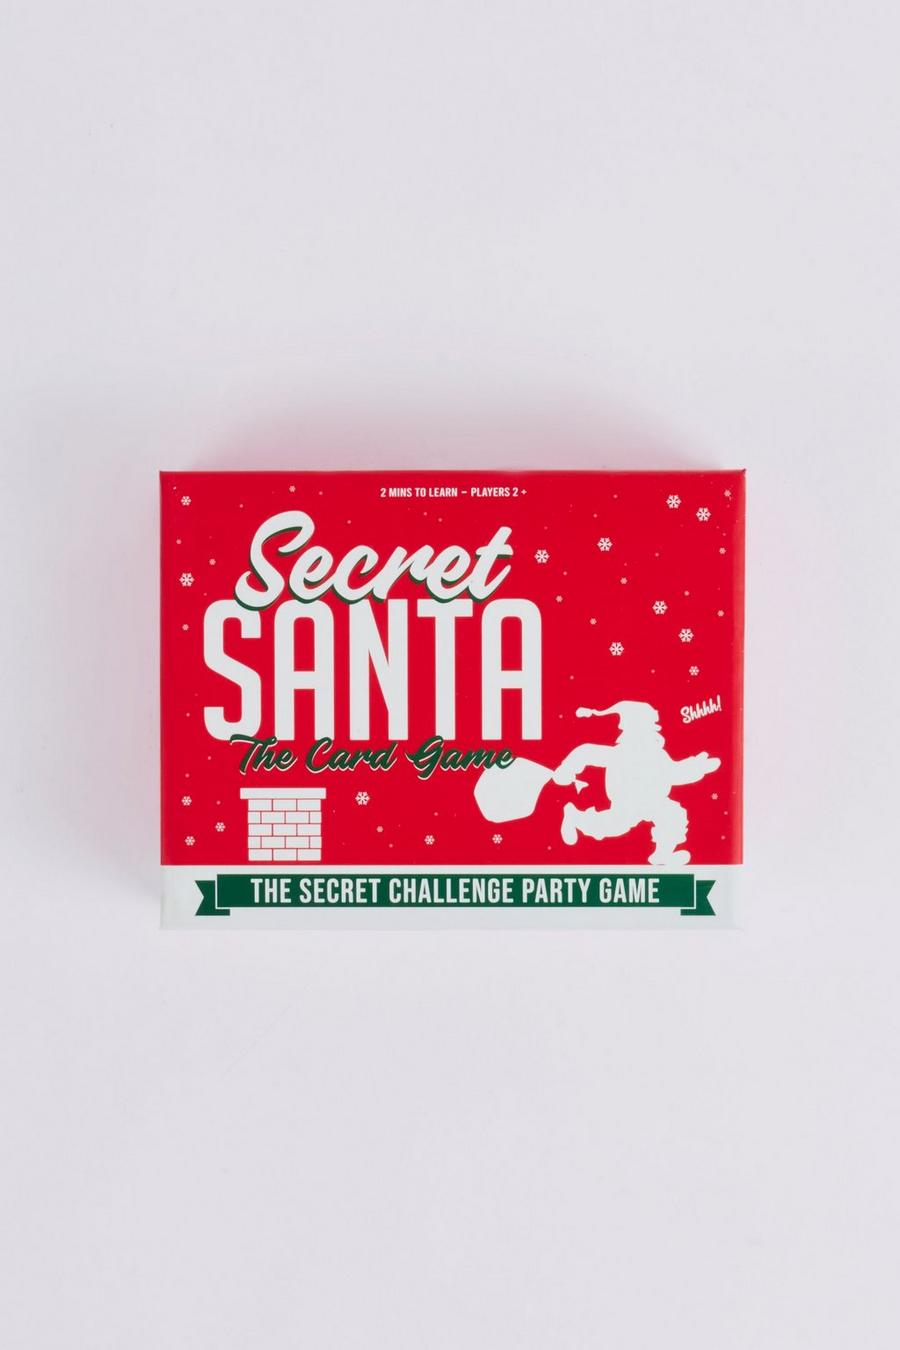 Jeu Secret Santa